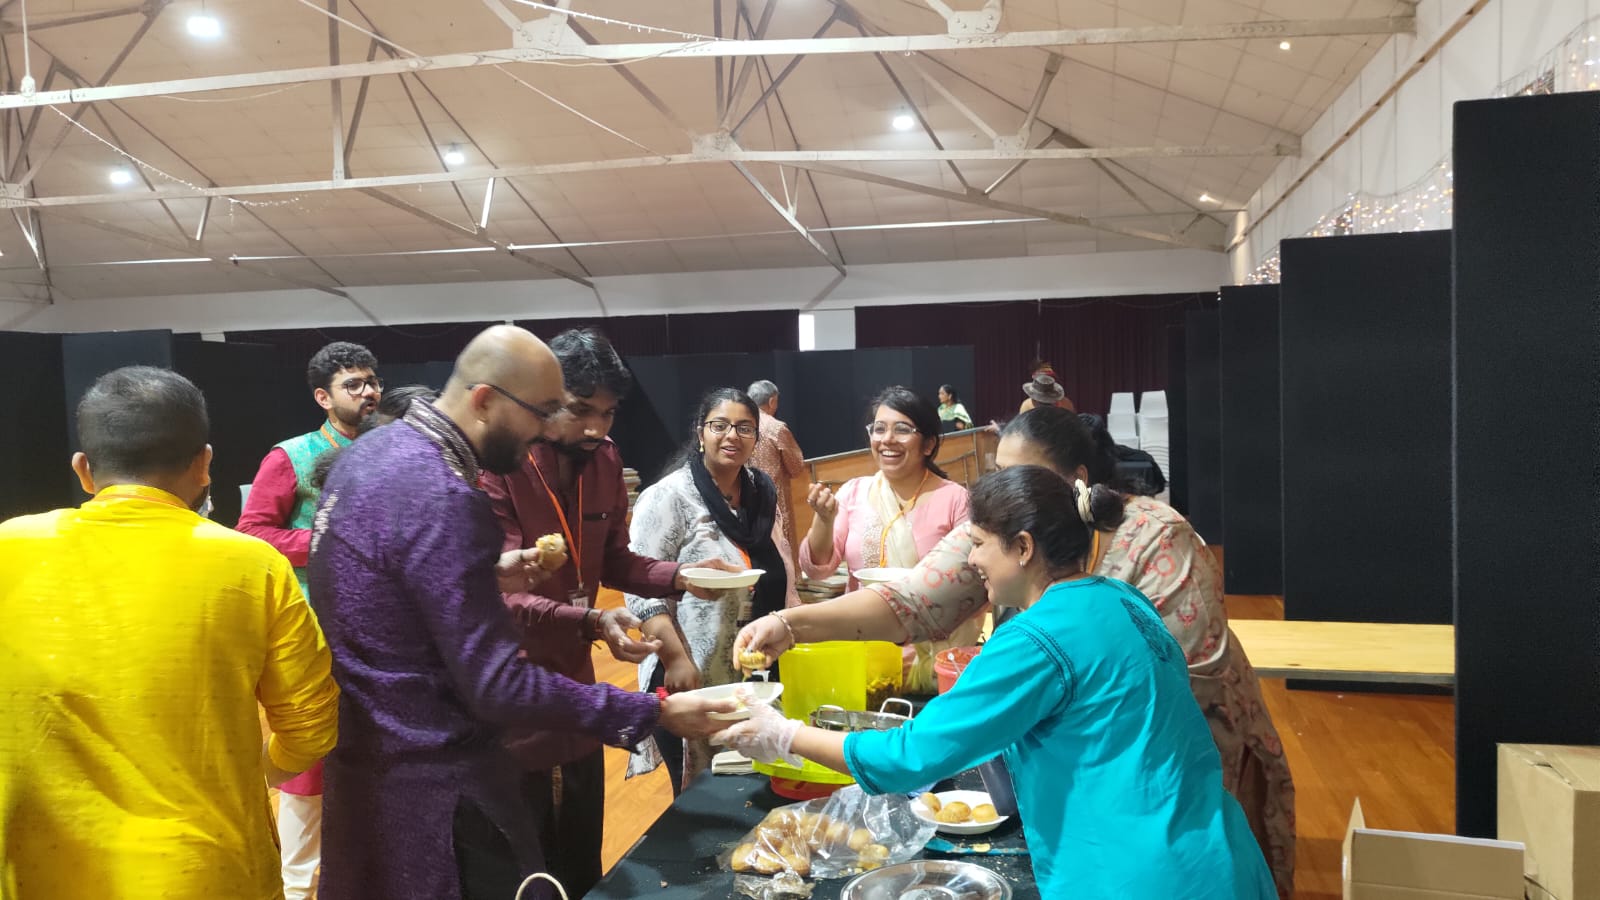 Guru Purnima Festival and First Ethnic Market at Hindu Heritage Centre Rotorua: A Celebration of Diversity and Community